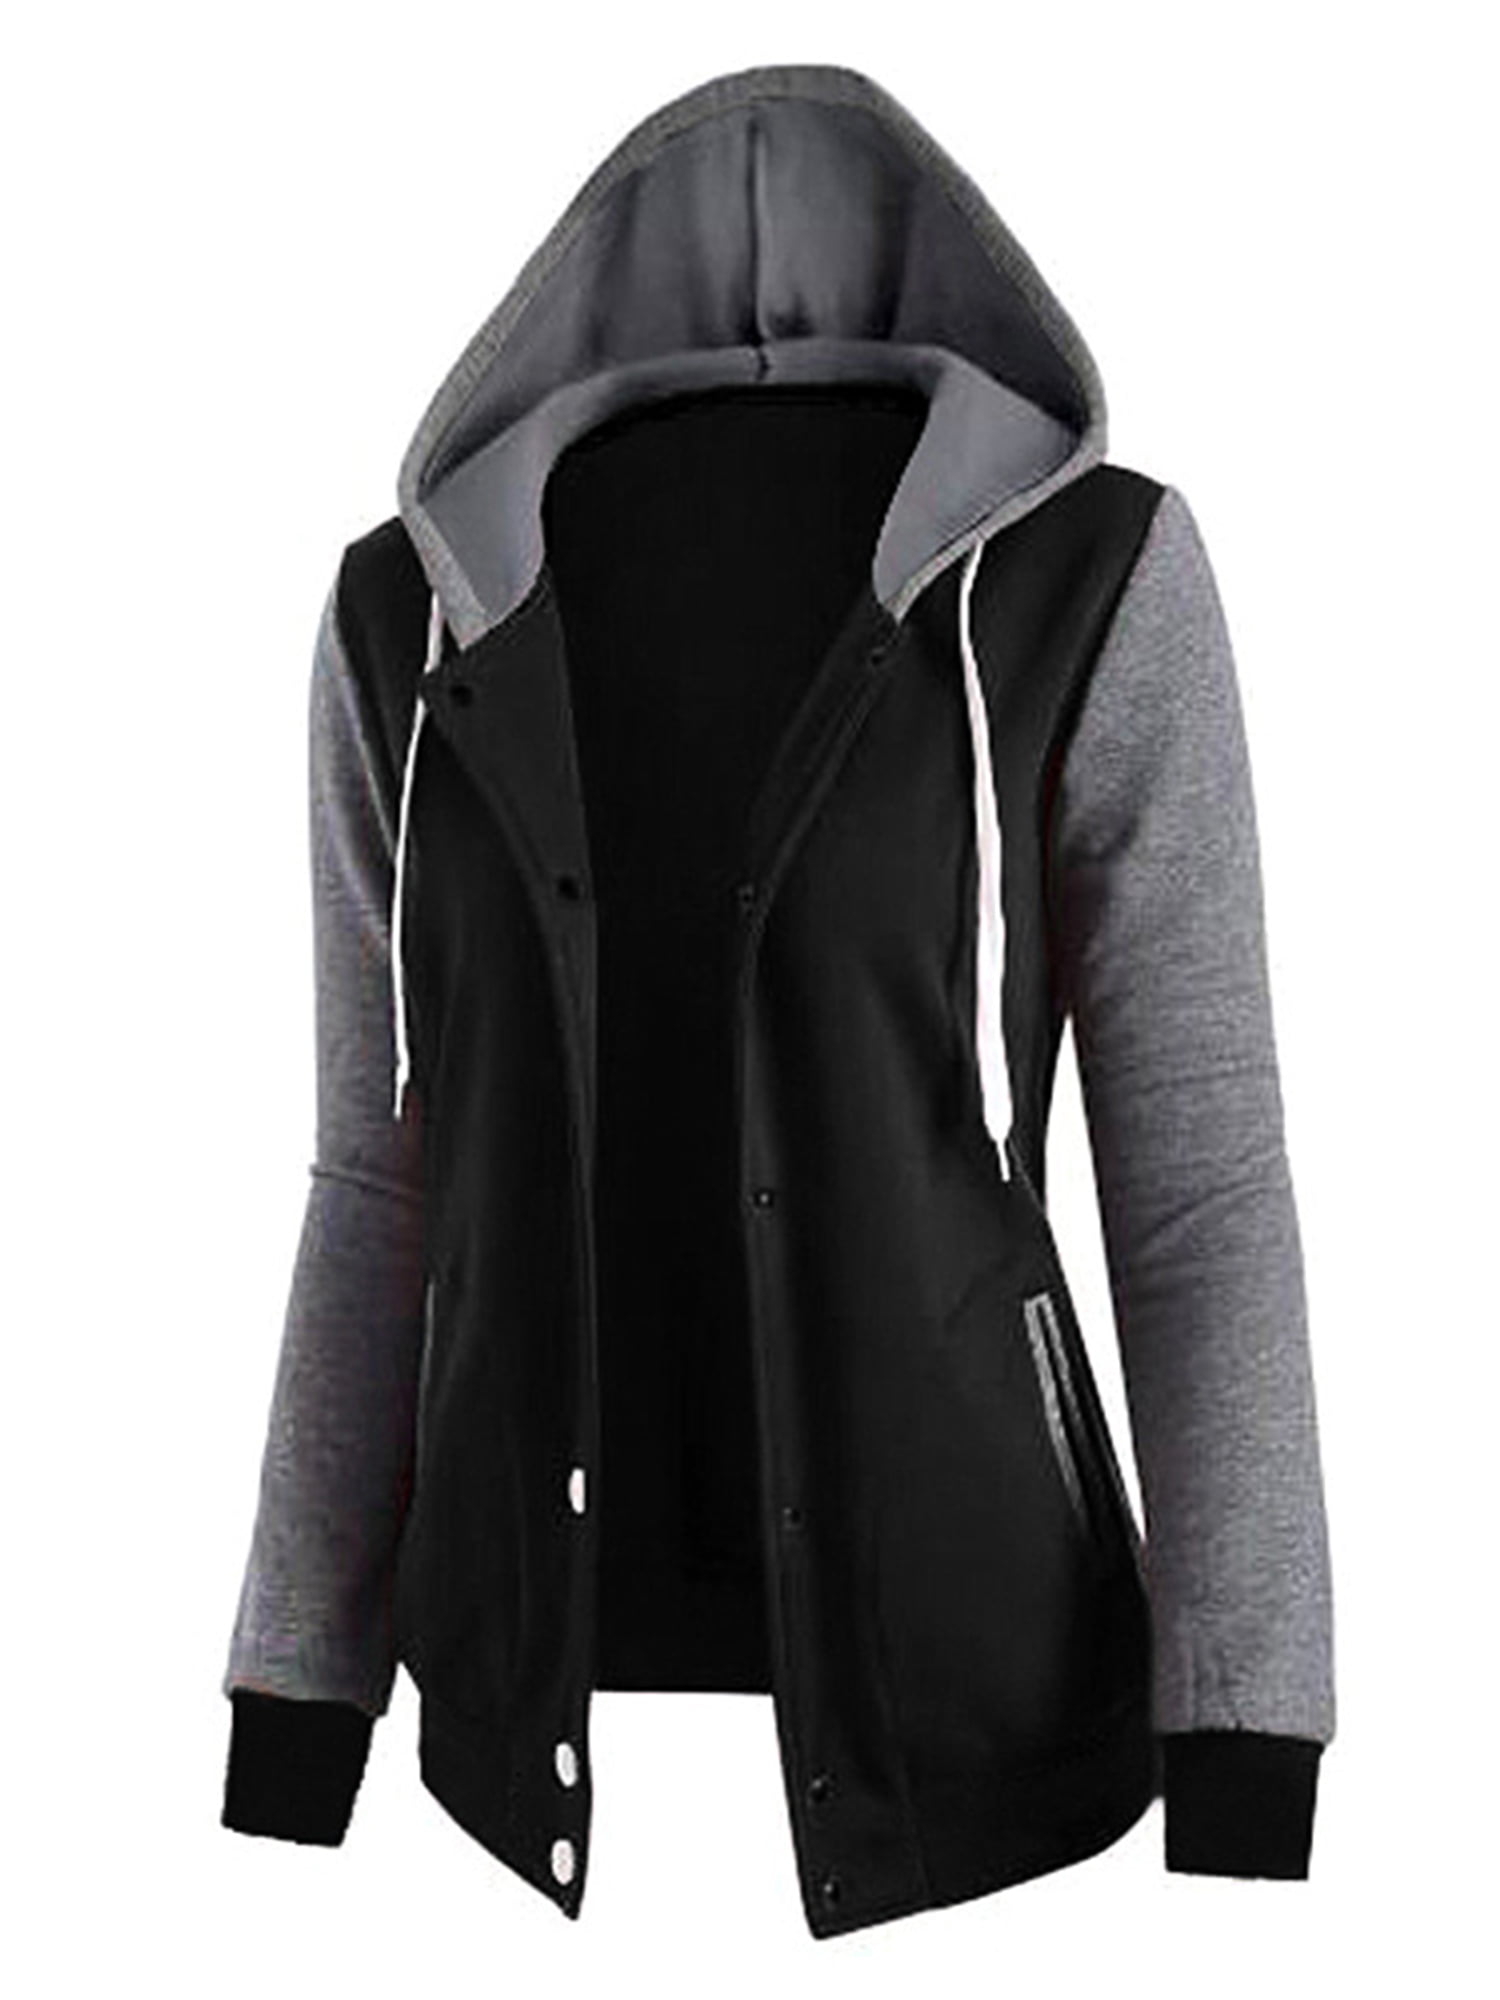 CBTLVSN Womens Drawstring Sweatshirts Casual Zip Front Hoodies Coat 